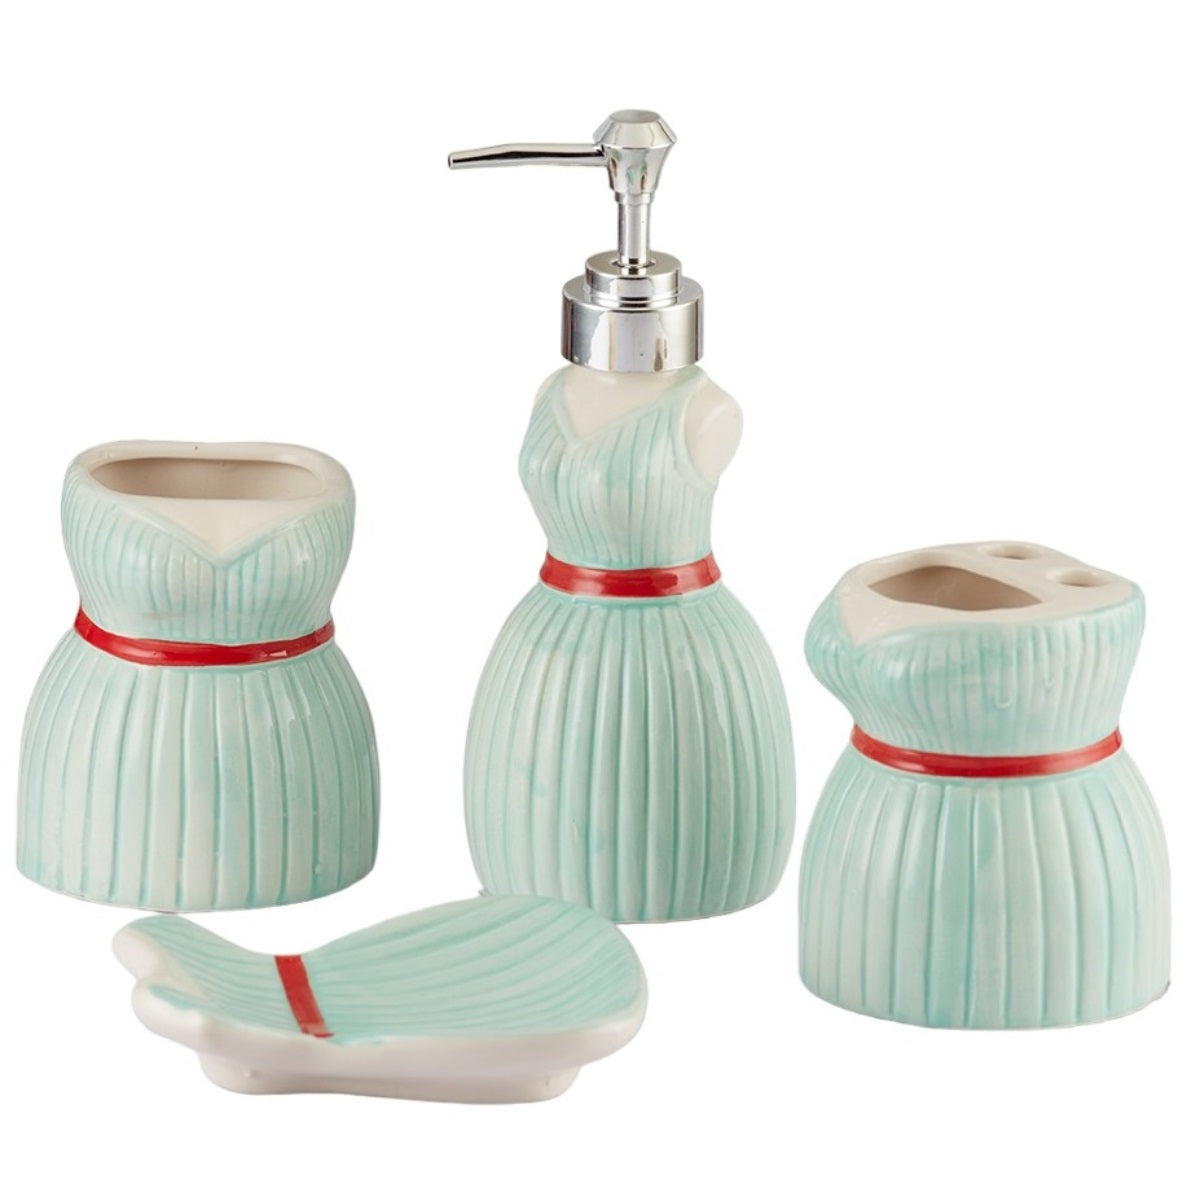 Ceramic Bathroom Accessories Set of 4 Bath Set with Soap Dispenser (9894)